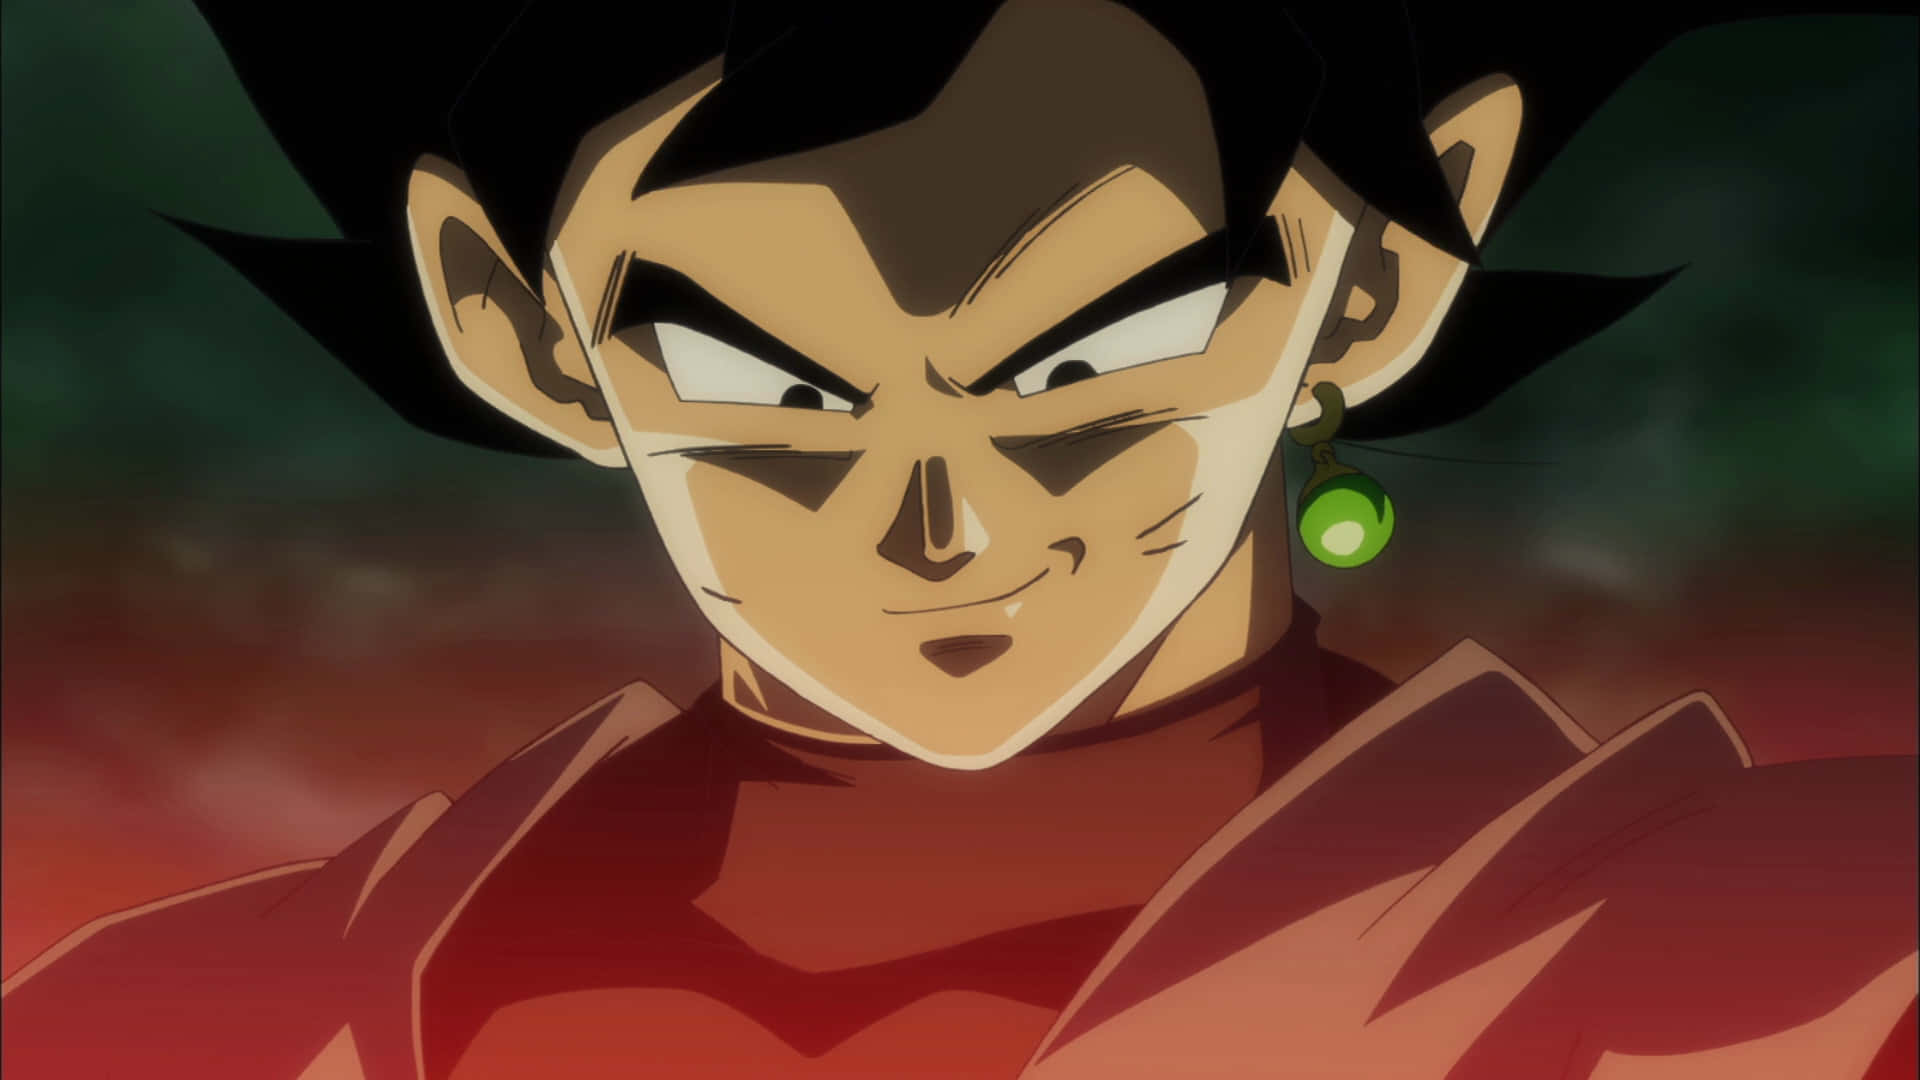 "Goku Black, the Dark Super Saiyan"